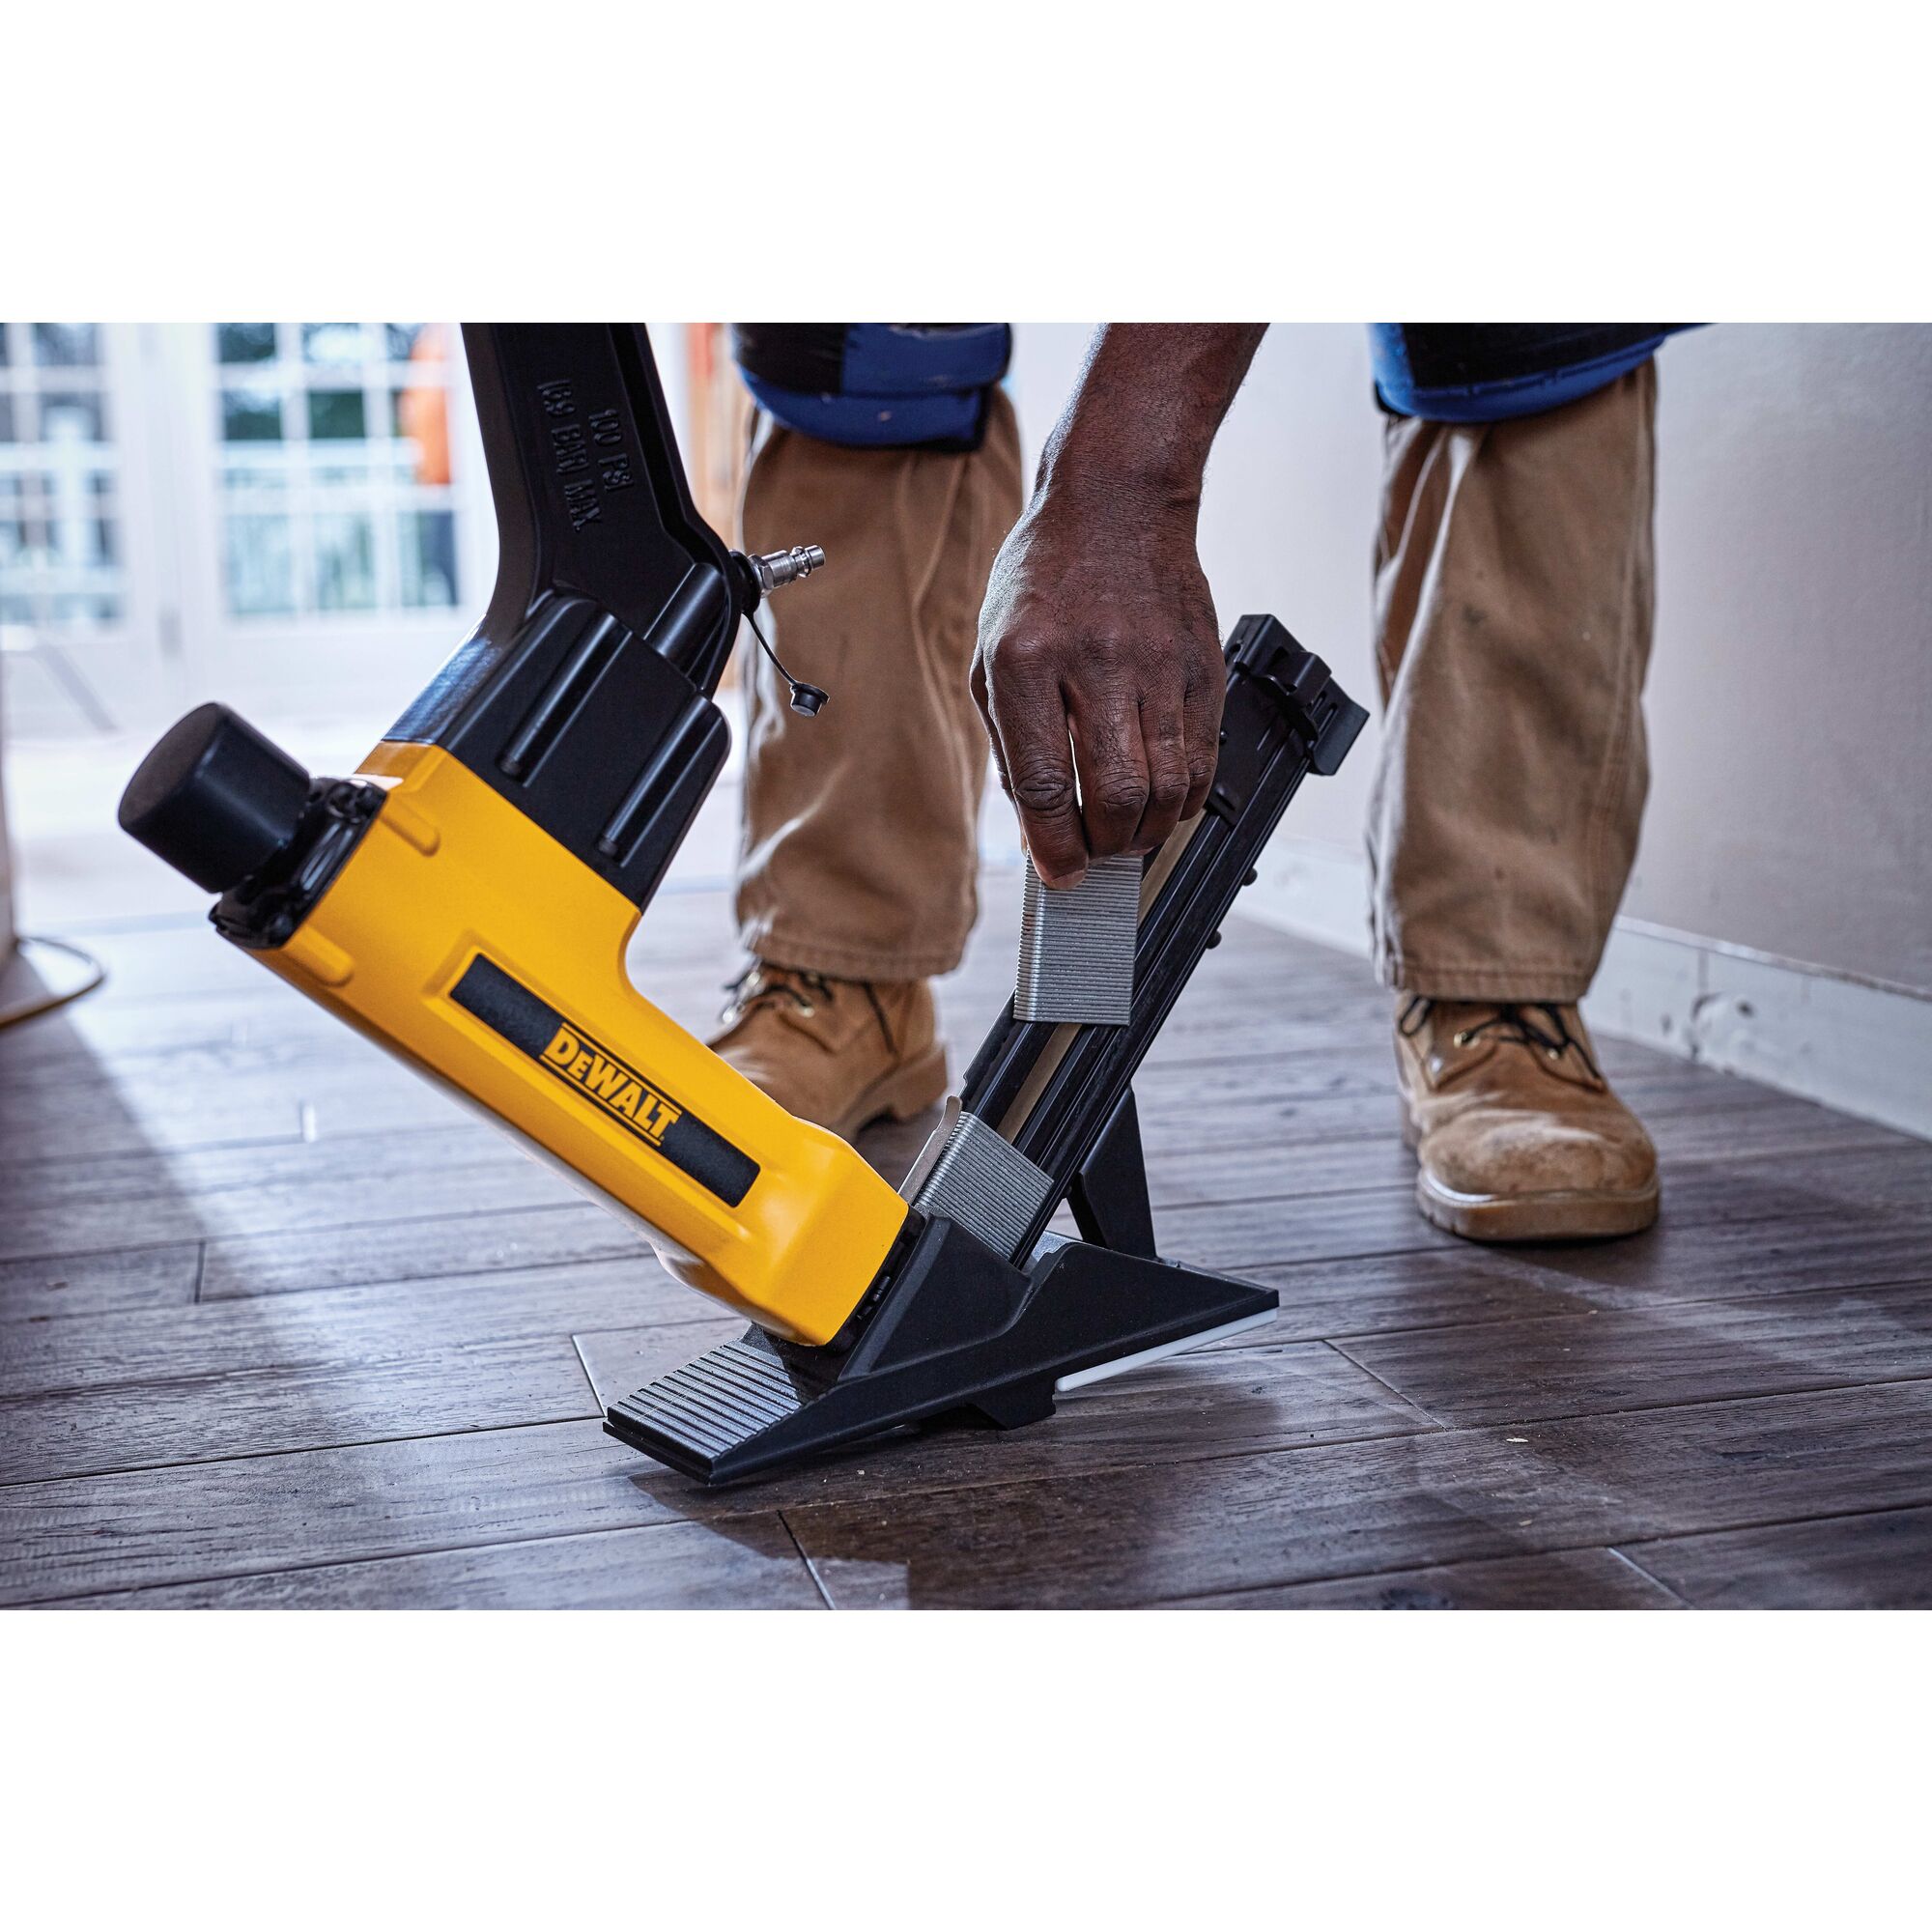 DEWALT DWFP12569 2-in-1 Flooring Tool Set for sale online 